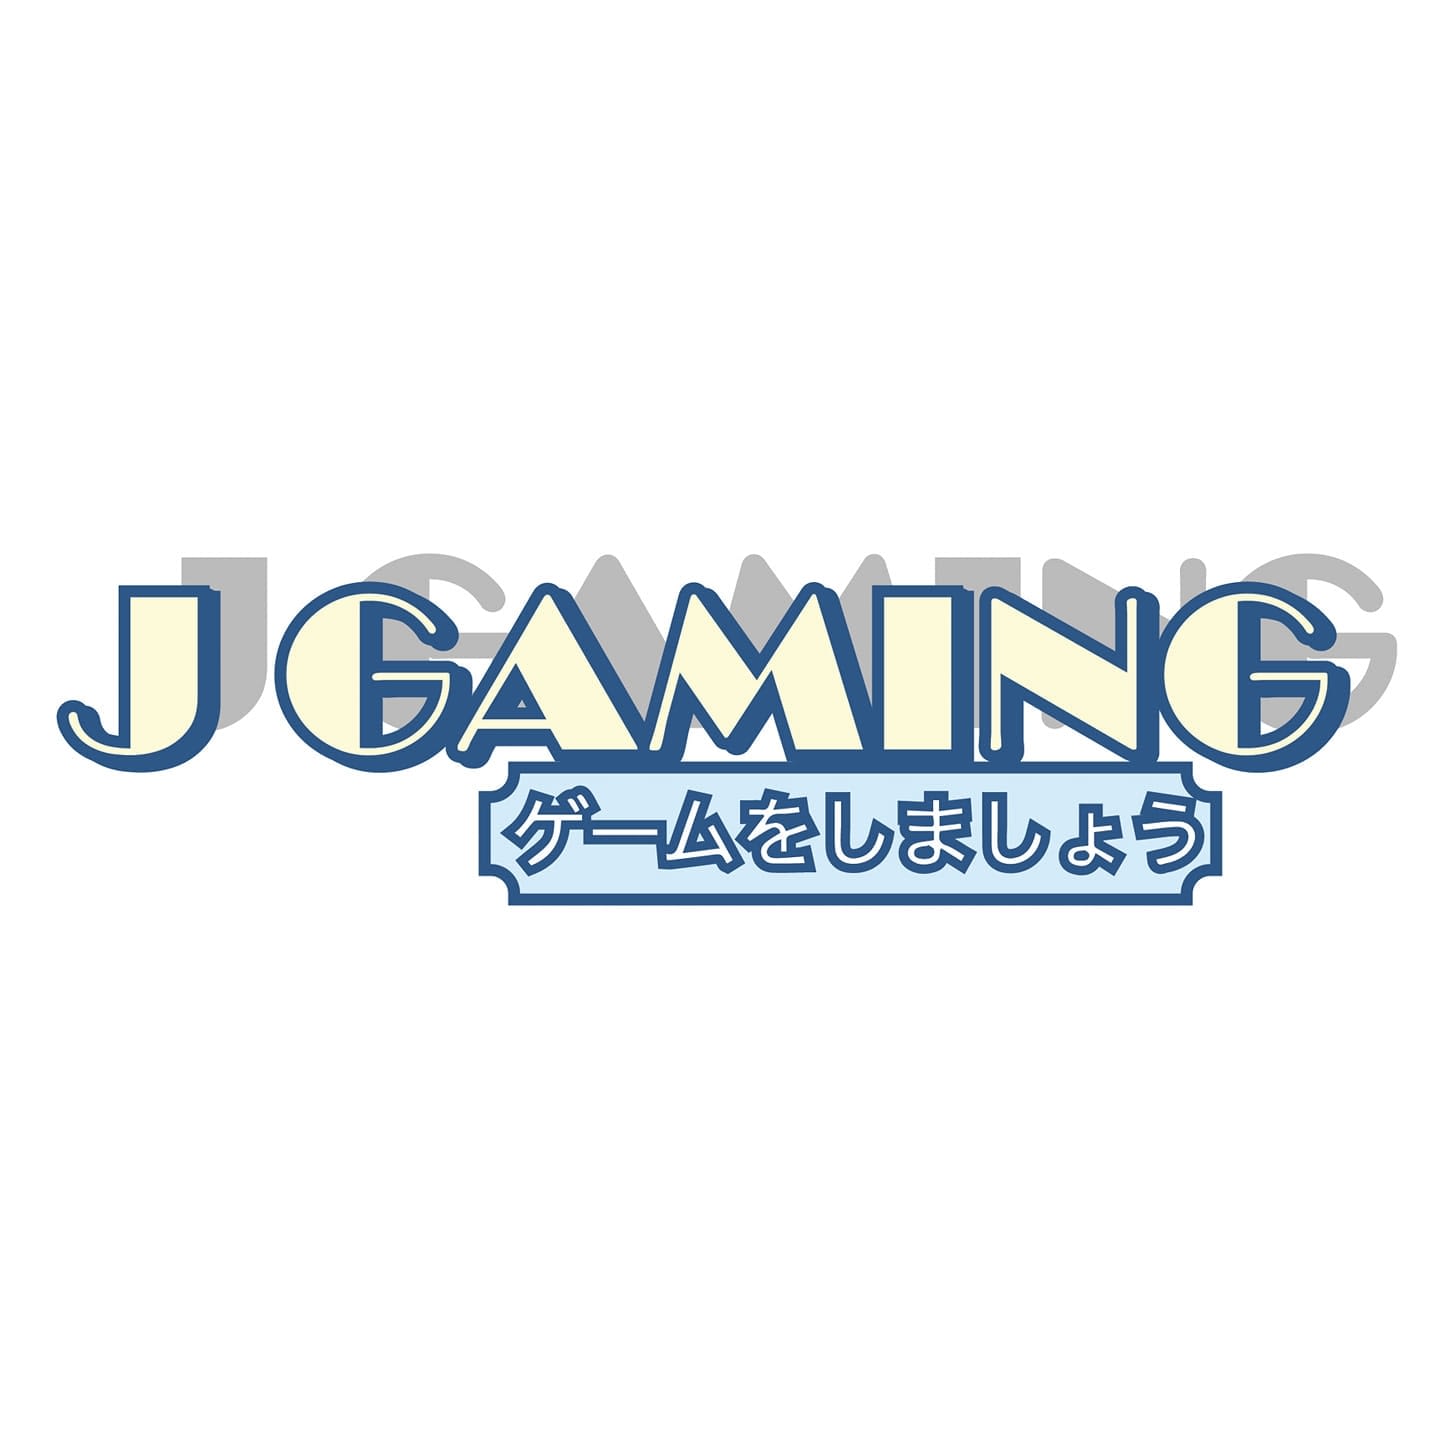 JGaming Retro Dealer